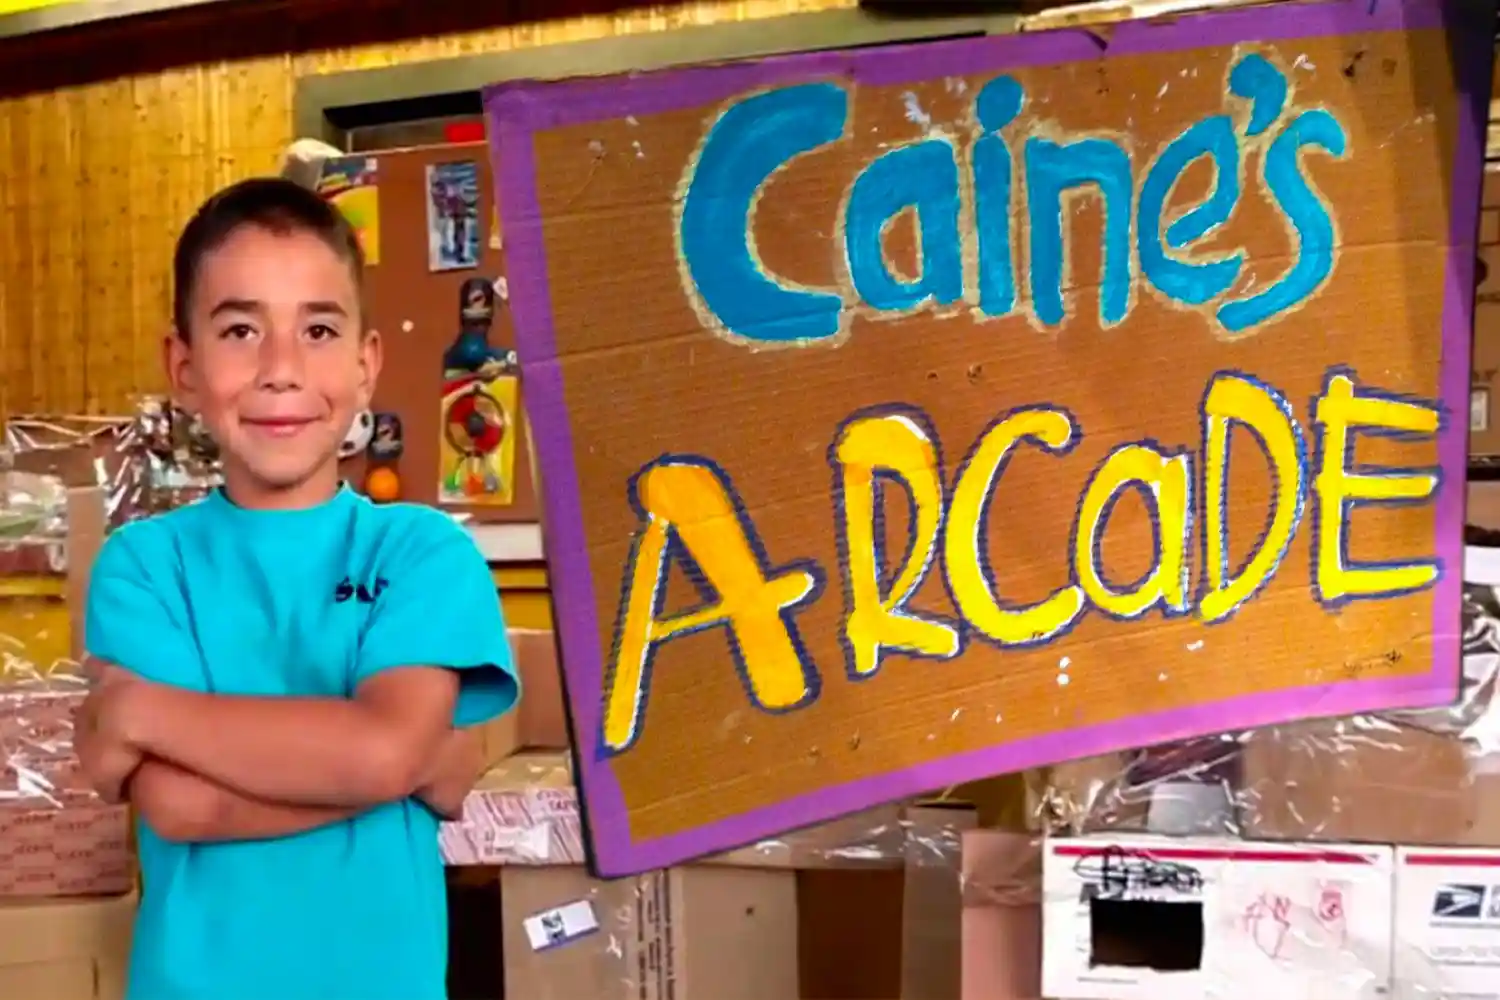 Caine's Arcade - Cardboard Arcade Kids Activity